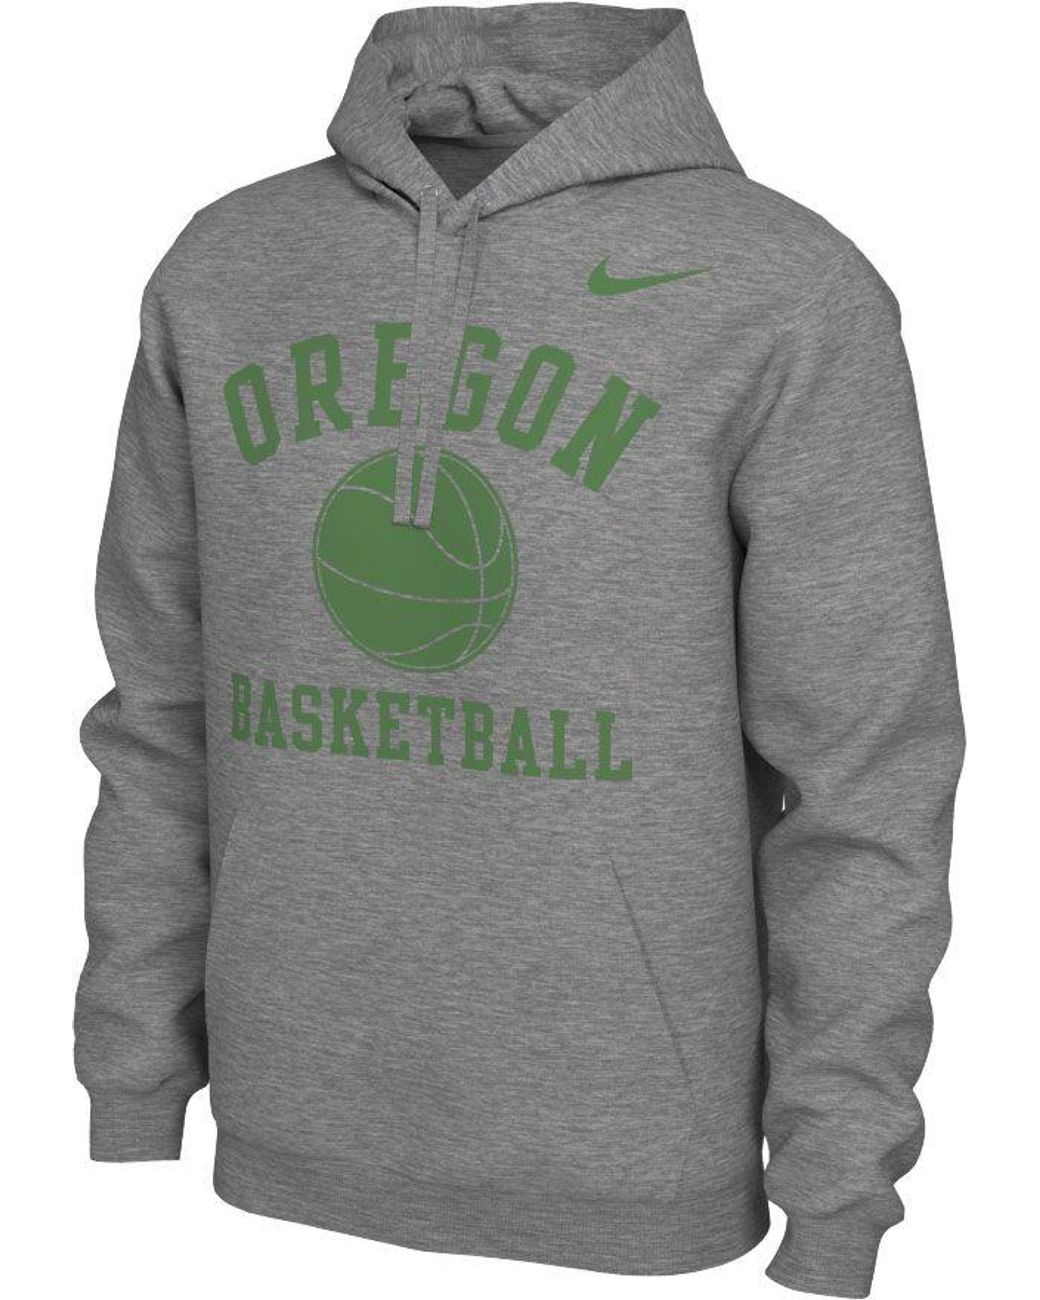 Nike Oregon Ducks Grey Pullover Basketball Hoodie in Gray for Men - Lyst